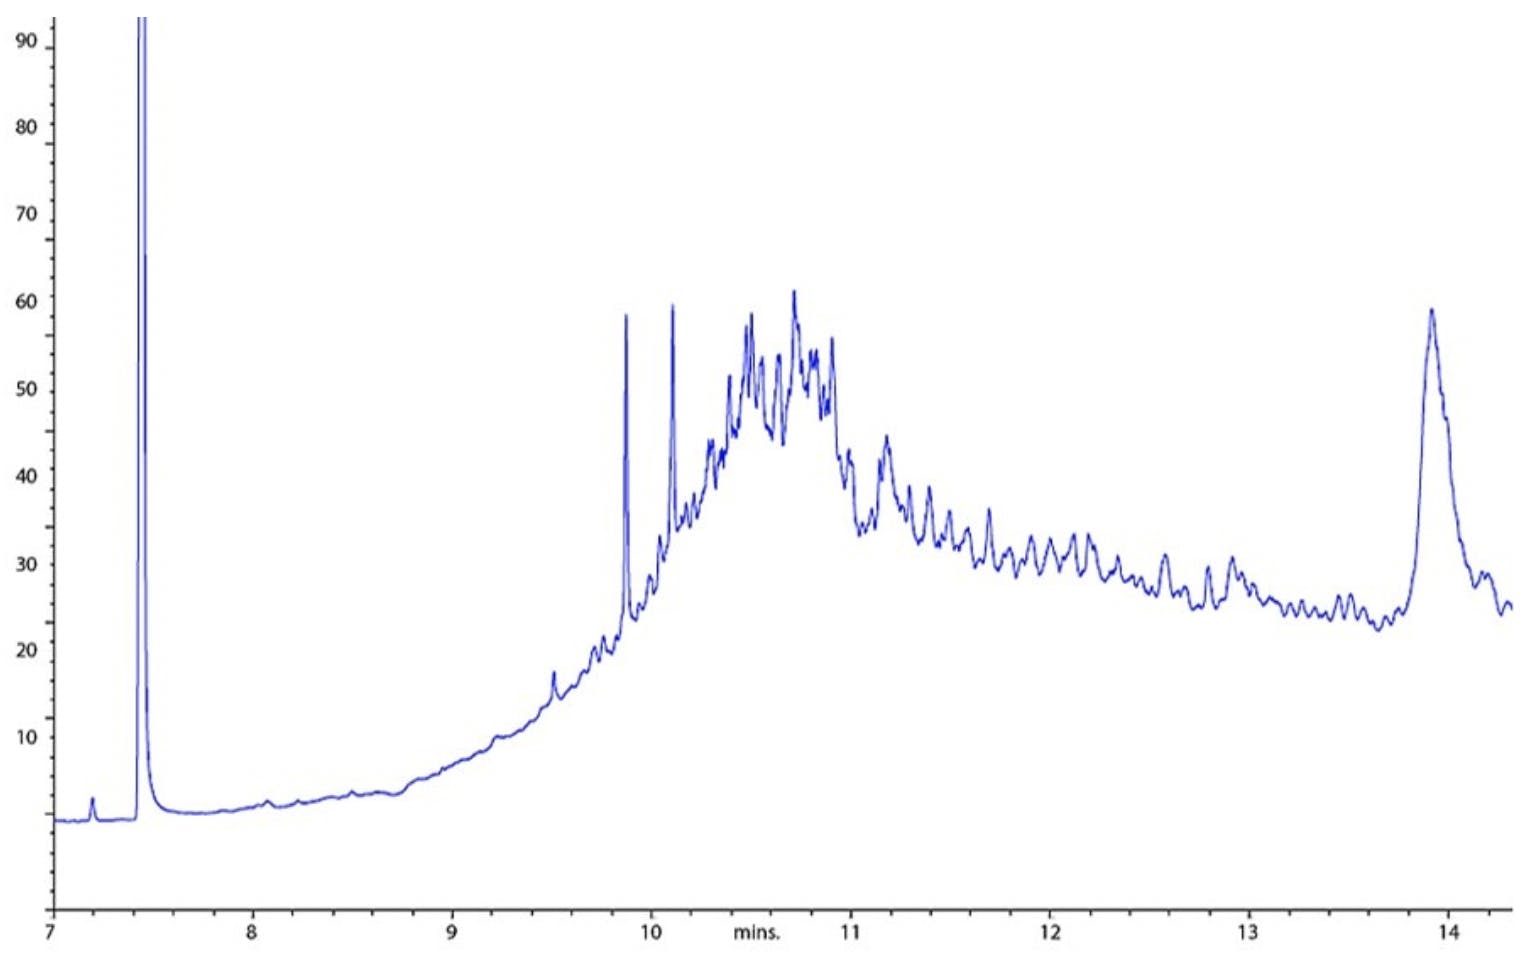 GC chromatogram showing baseline disturbance of regularly spaced later eluting peaks and underlying baseline ‘hump’.